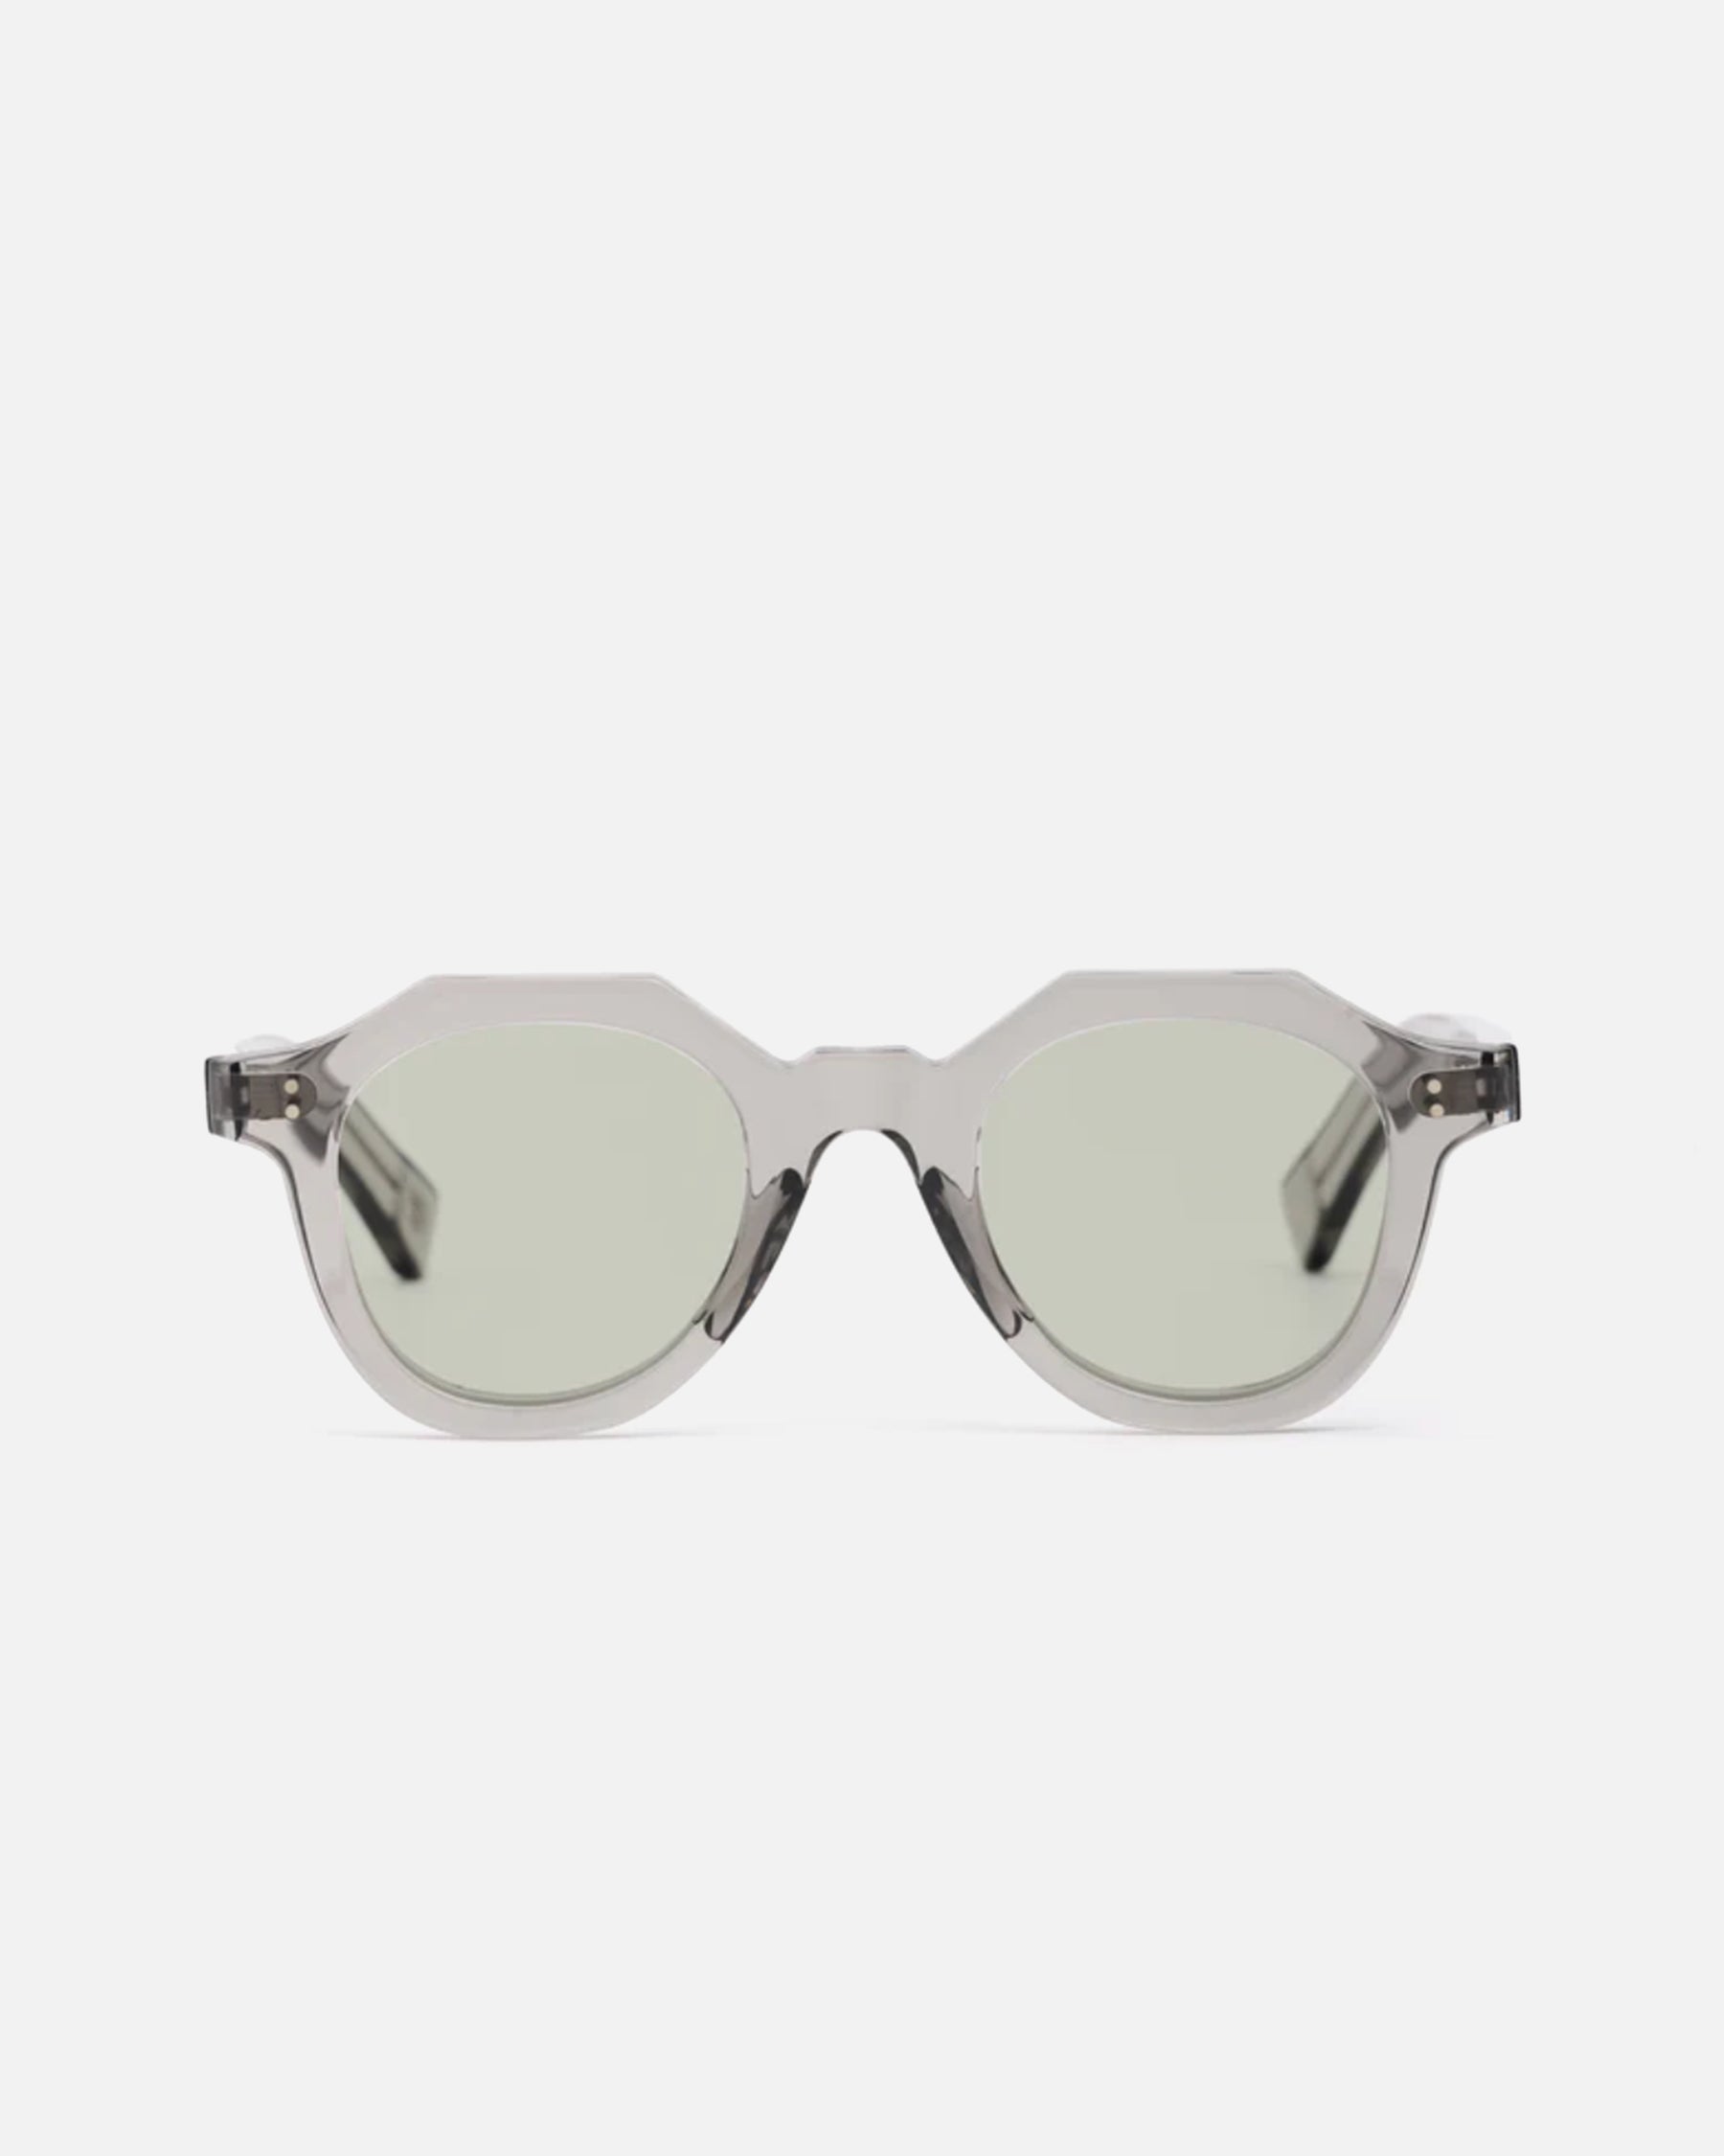 gp-02 Sunglasses grir/ Lens: Green